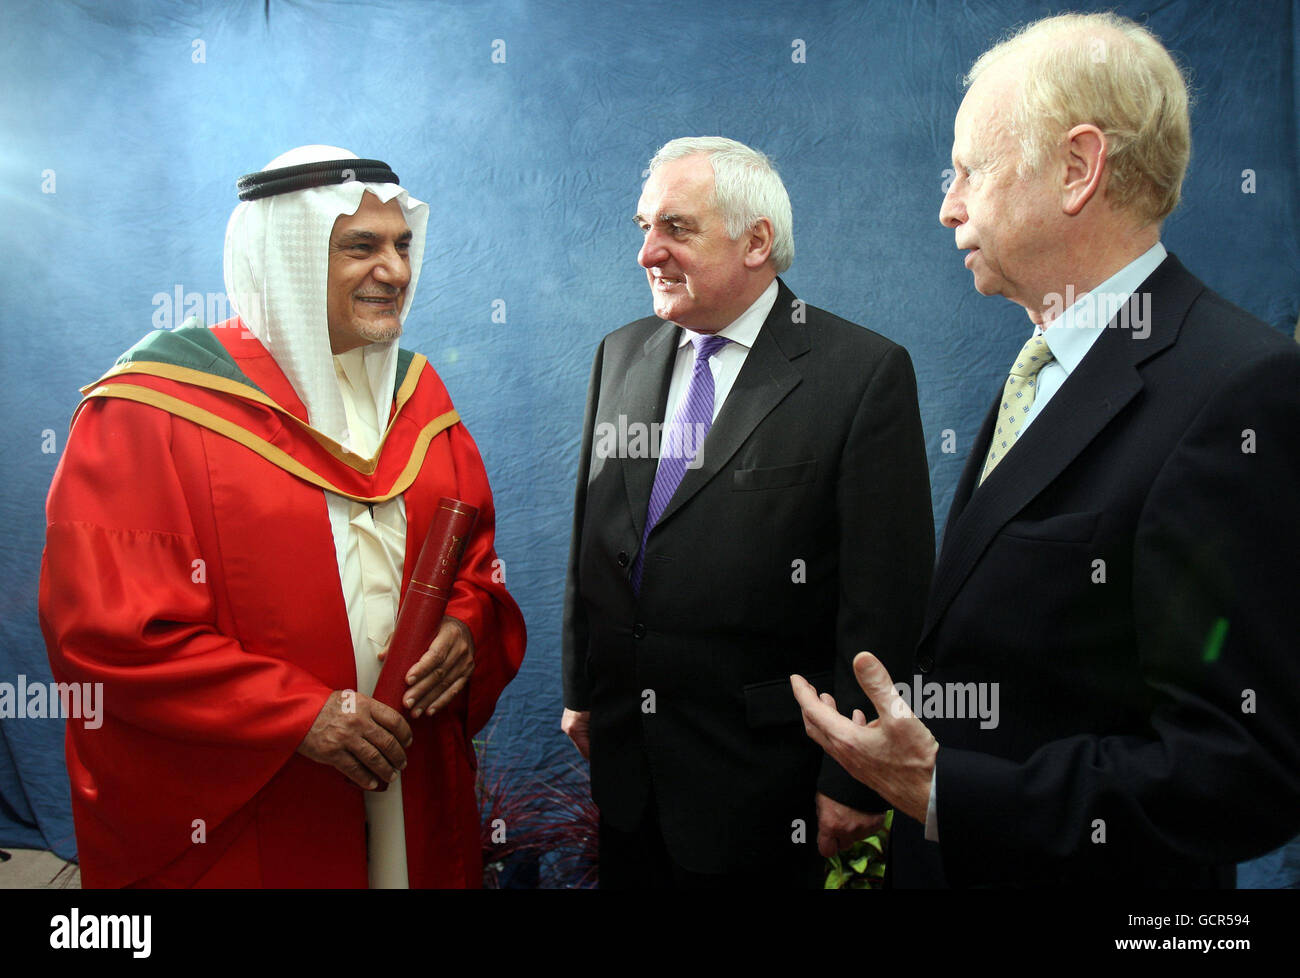 Prinz Turki Bin Faisal Al Saud Geehrt Stockfotografie Alamy